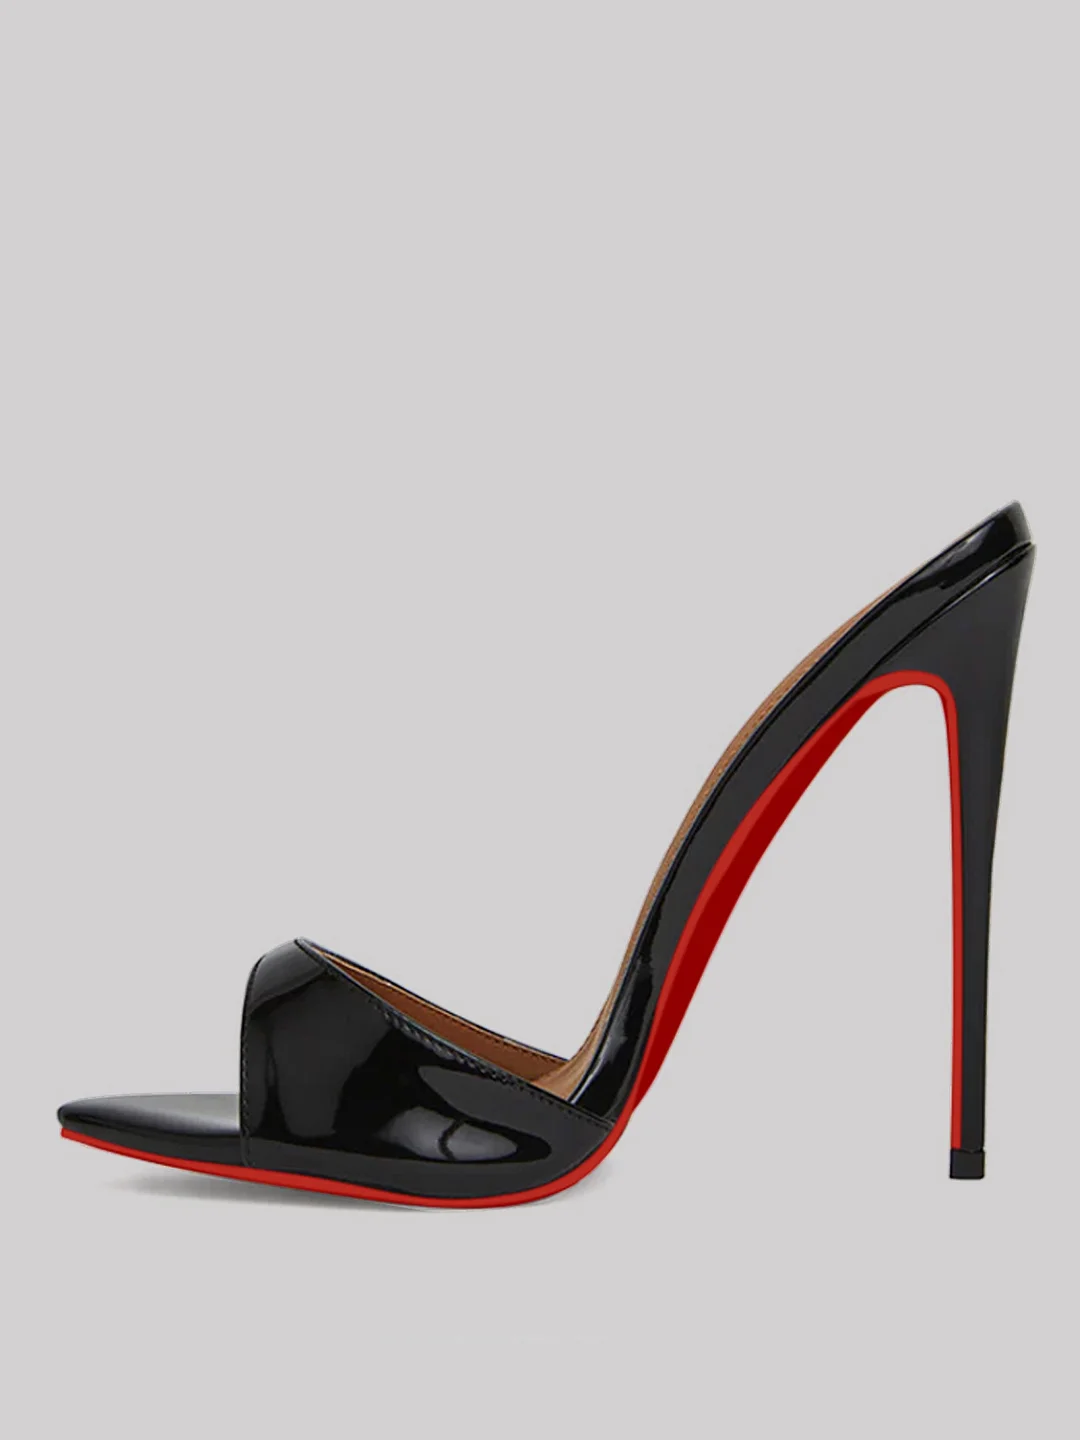 120mm Women's Open Toe Sandals Stiletto Red Bottom High Heels Vegan Mules Patent Shoes